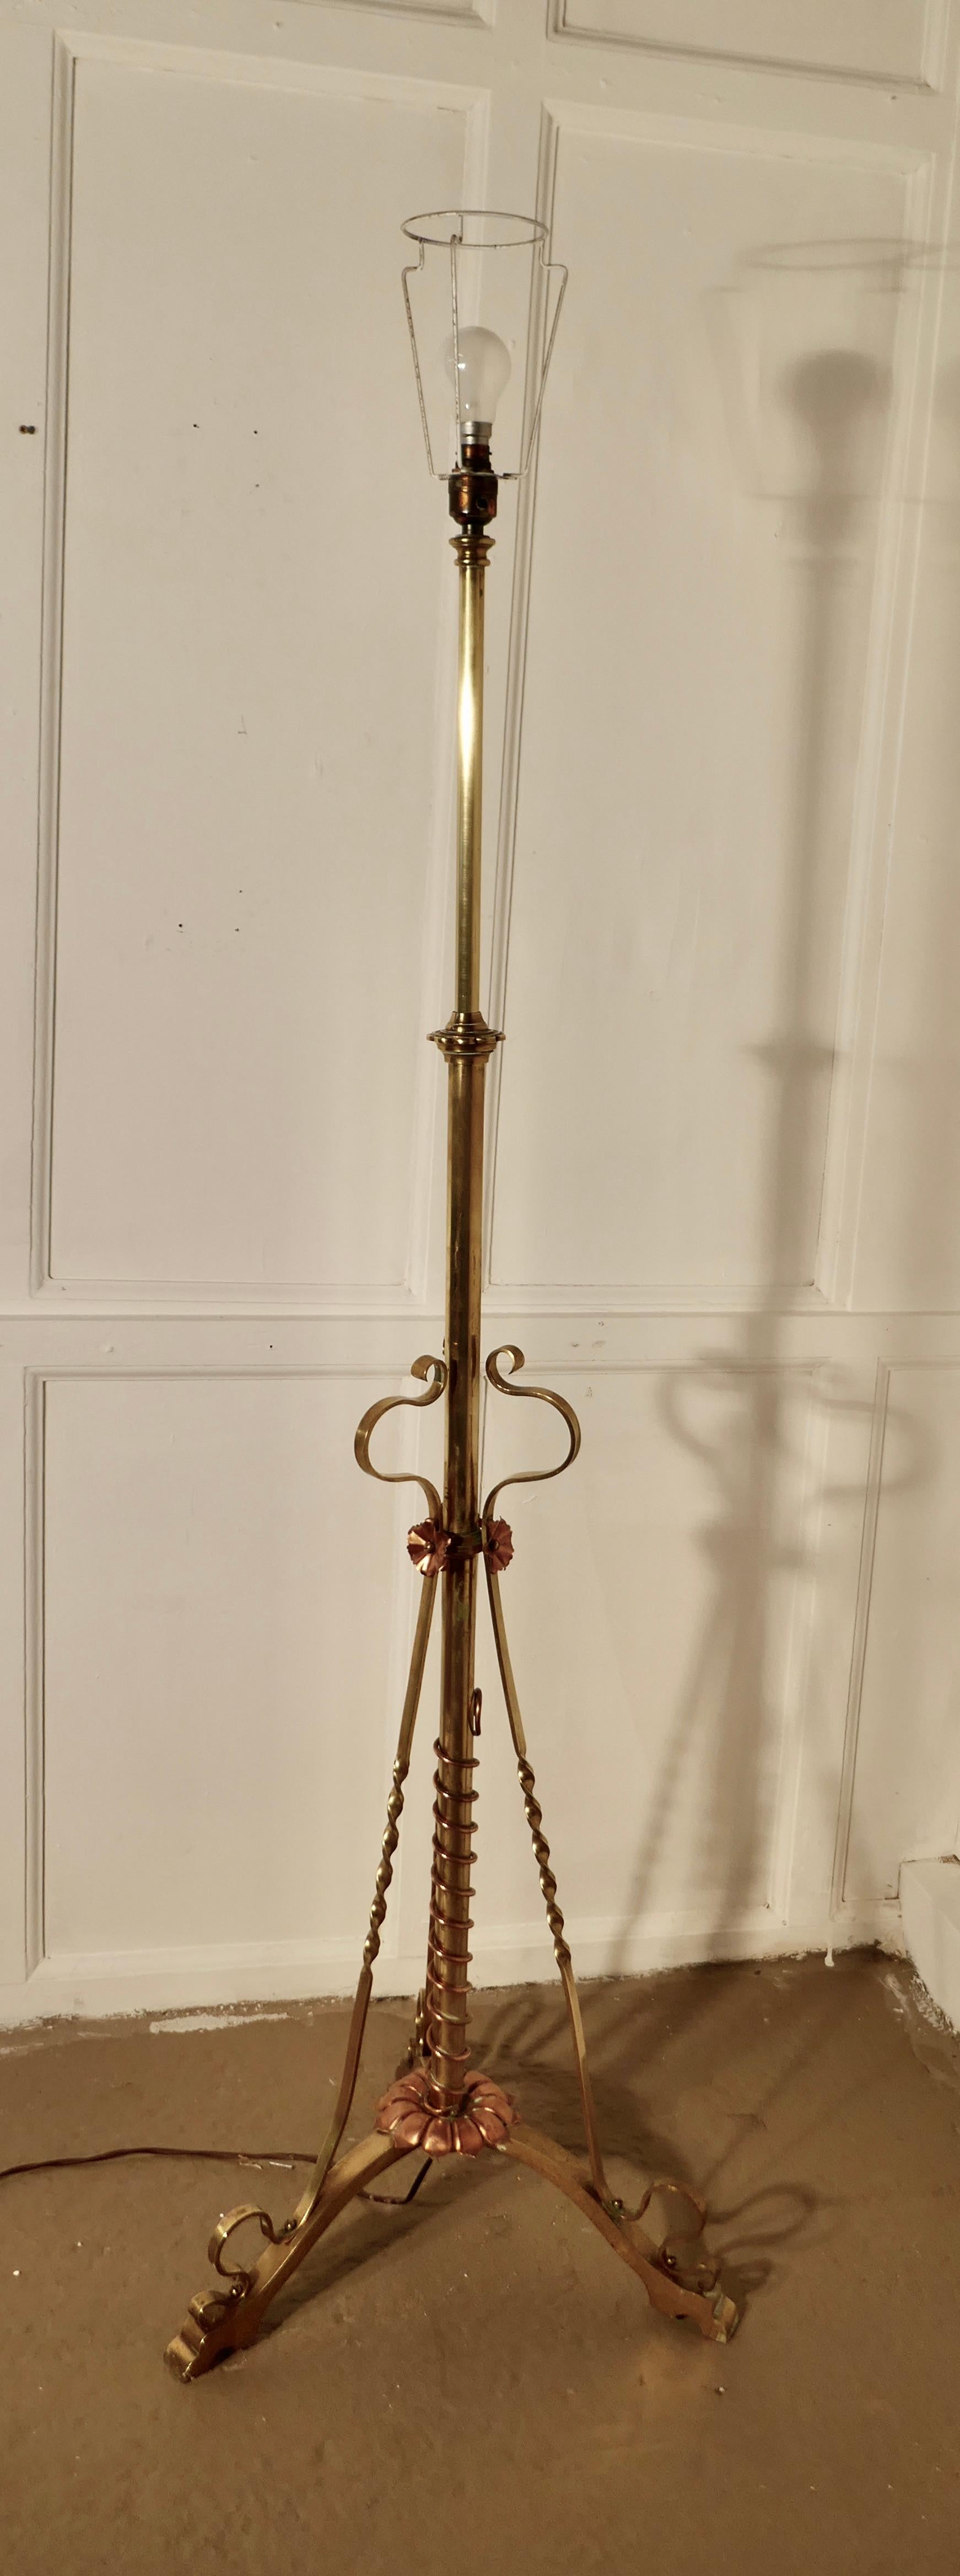 19th Century Arts & Crafts Extending Brass Floor Lamp, Standard Lamp